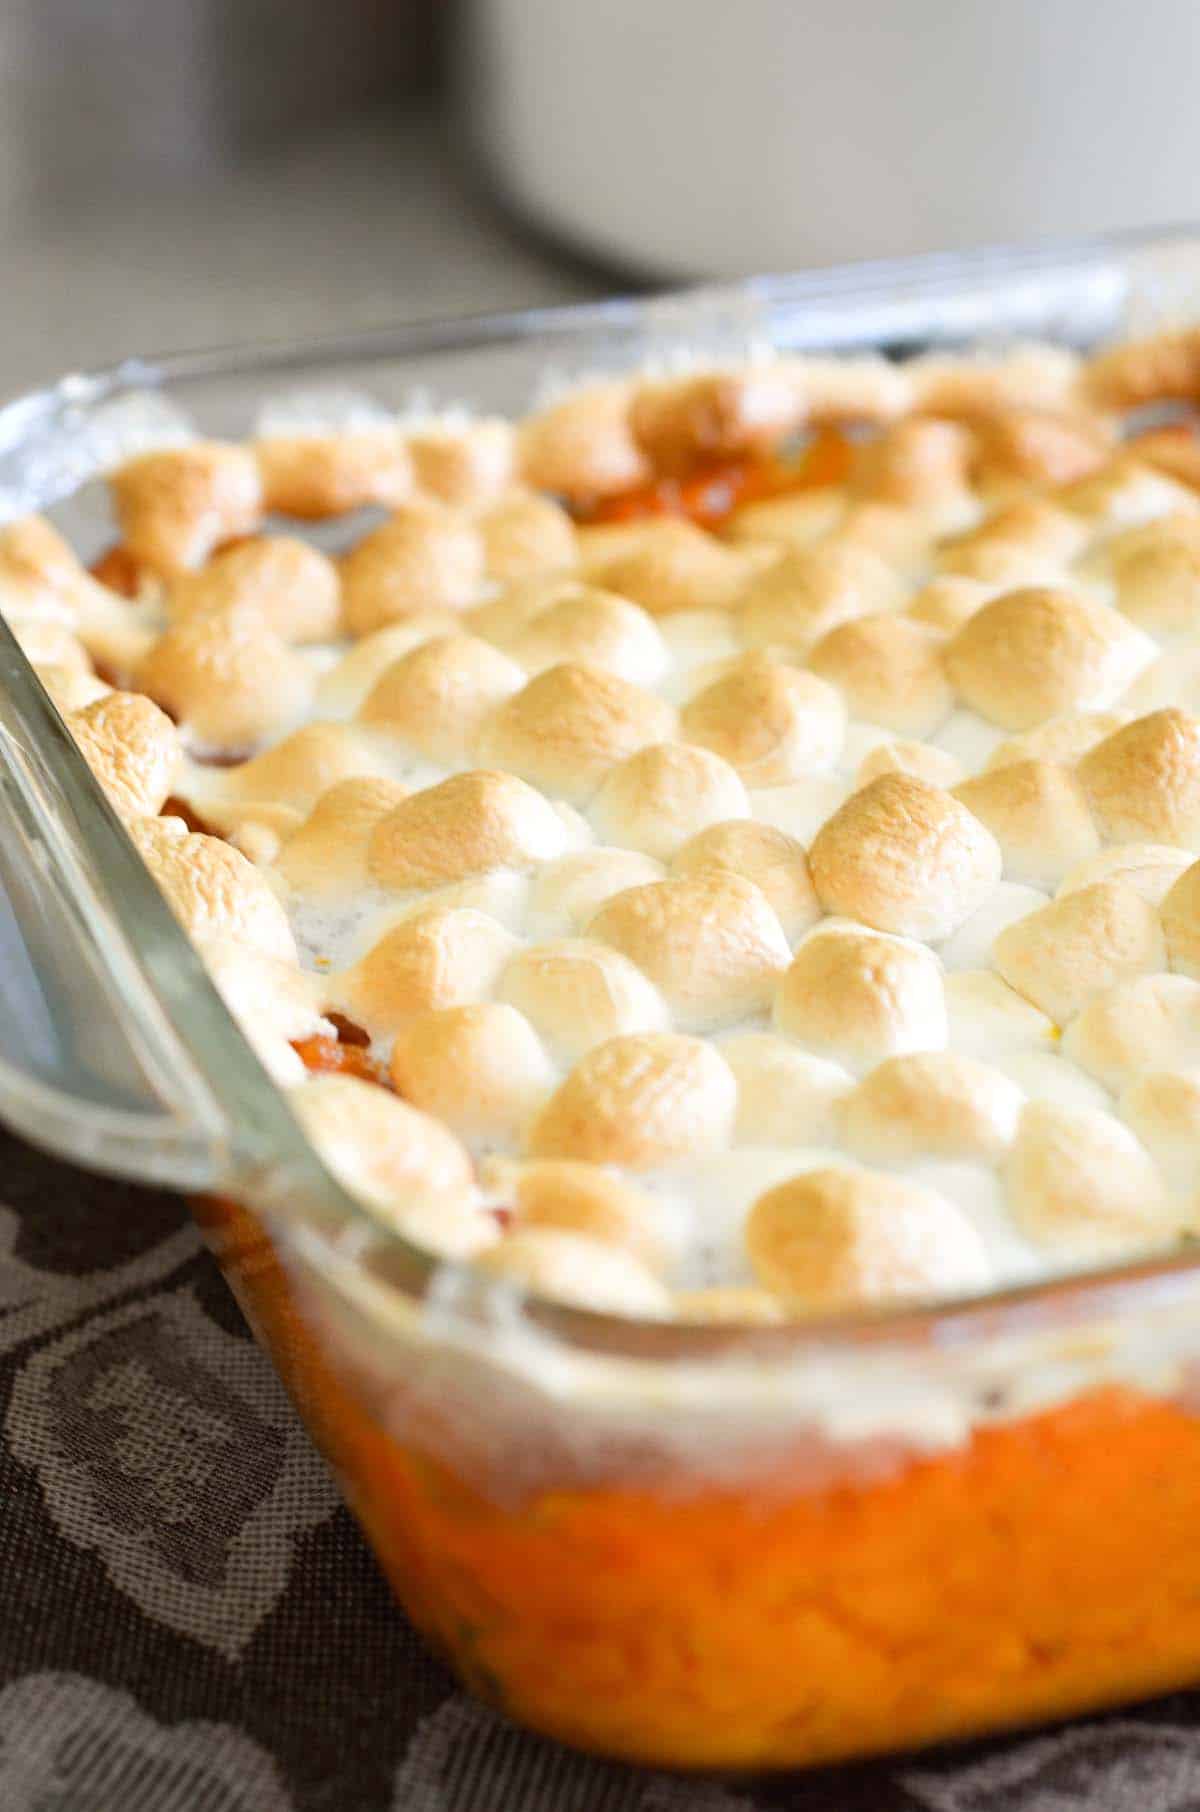 Sweet Potato Casserole with Marshmallows - THE BEST!